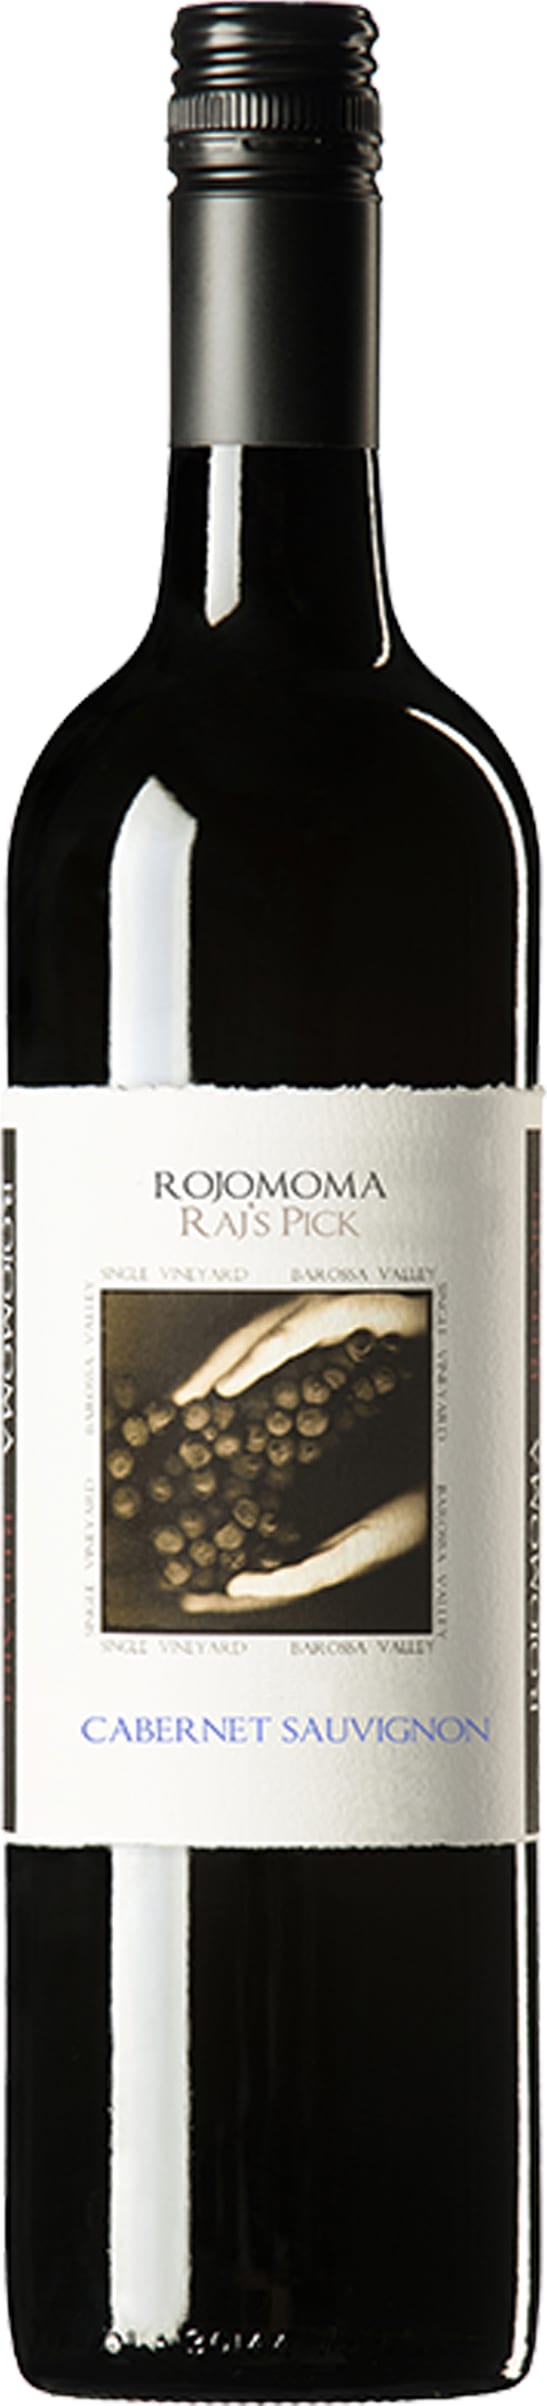 Rojomoma Rajs Pick Cabernet Sauvignon 2015 6x75cl - Just Wines 